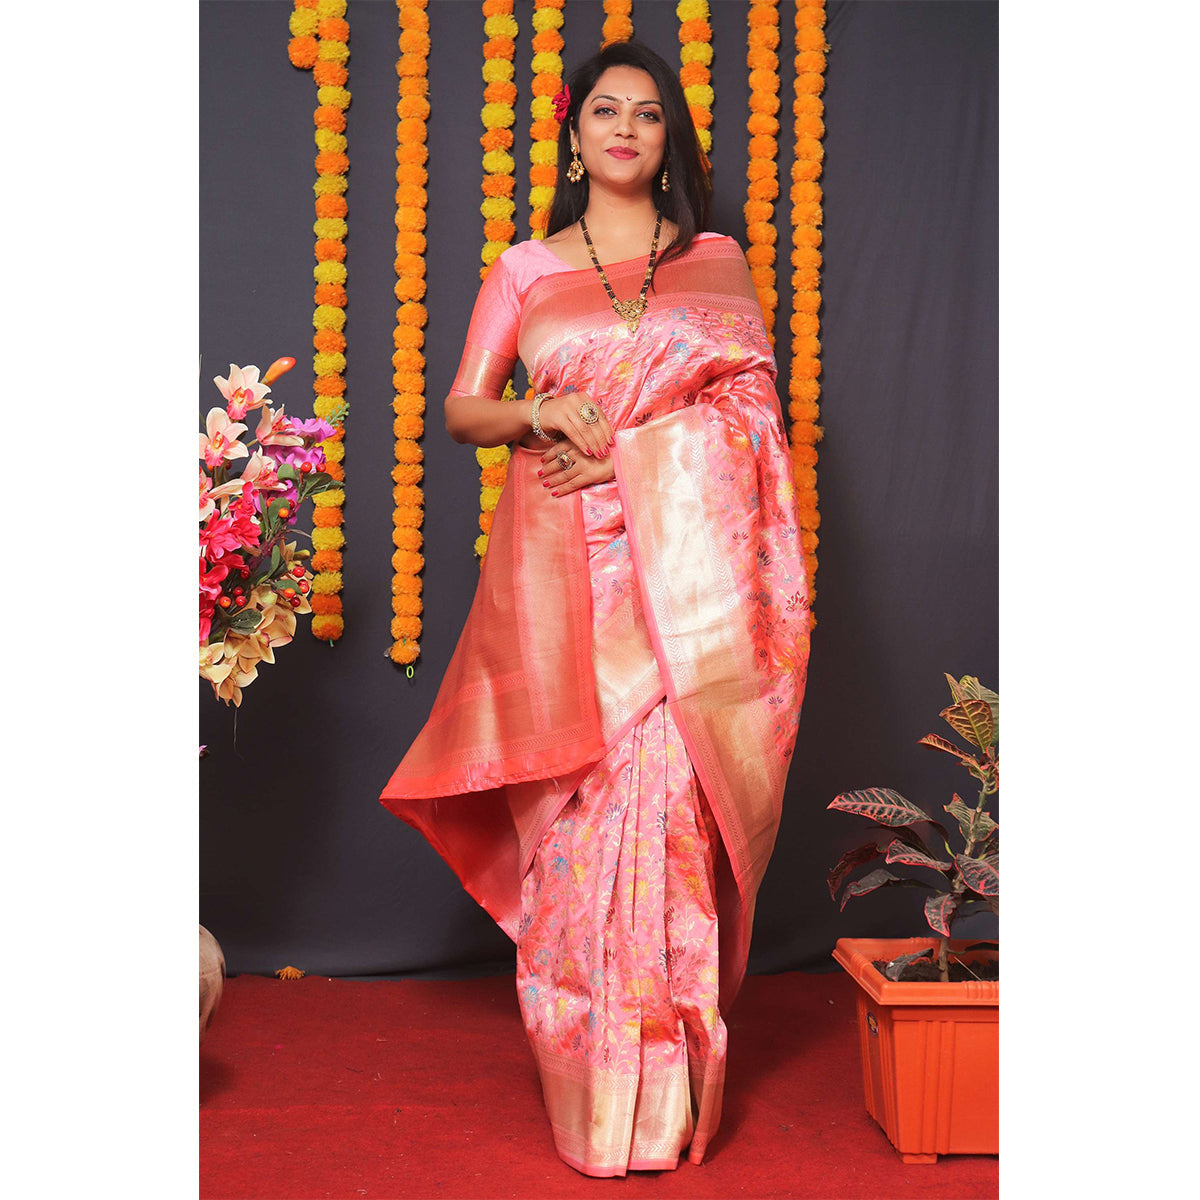 Shafnufab Women's Banarasi Silk Saree With Blouse  In  Pink